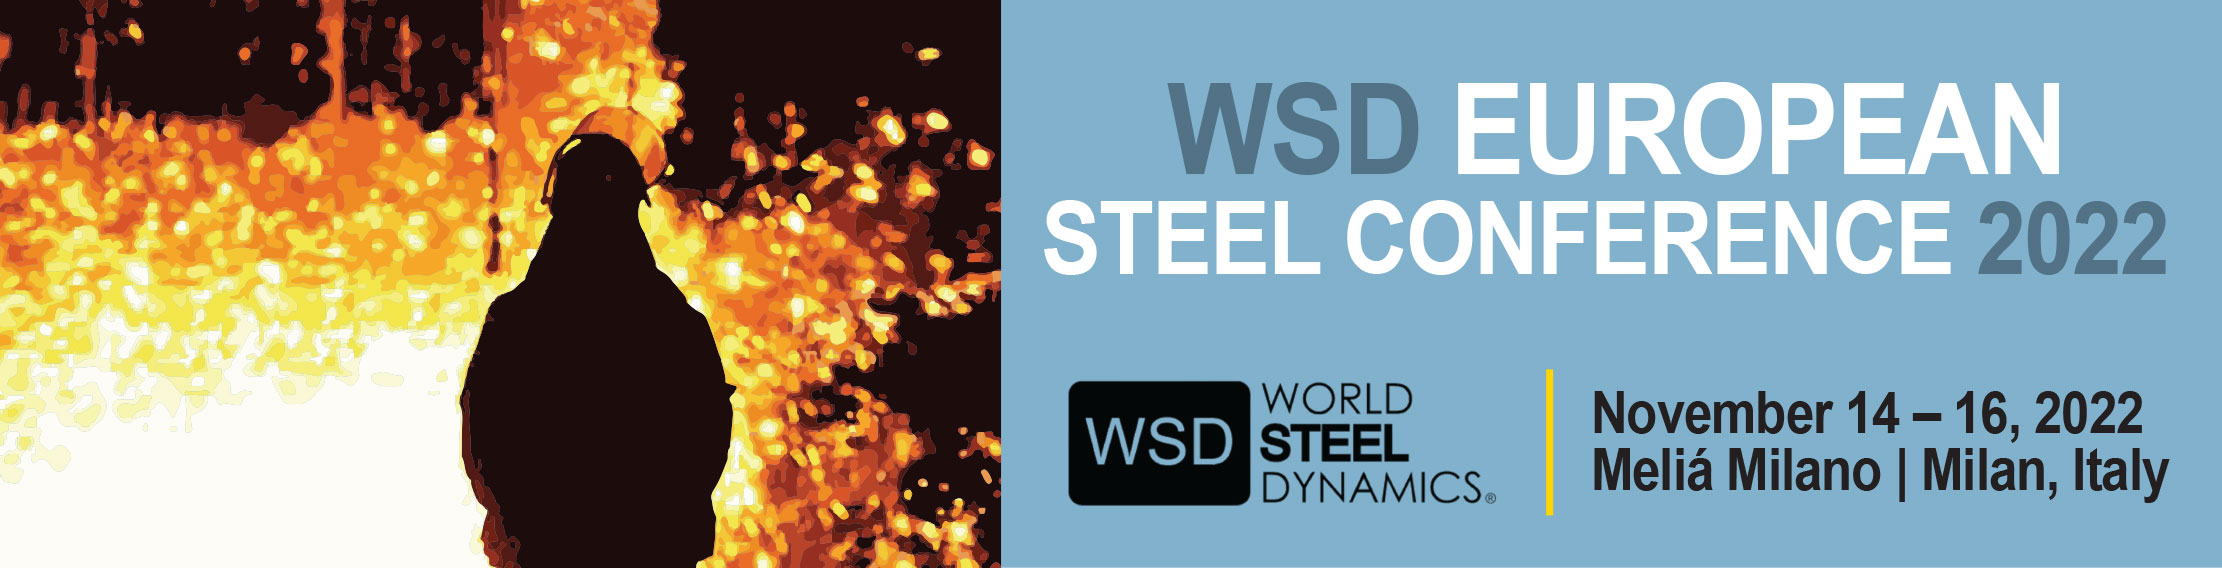 Global Steel Events WSD European Steel Conference 2022